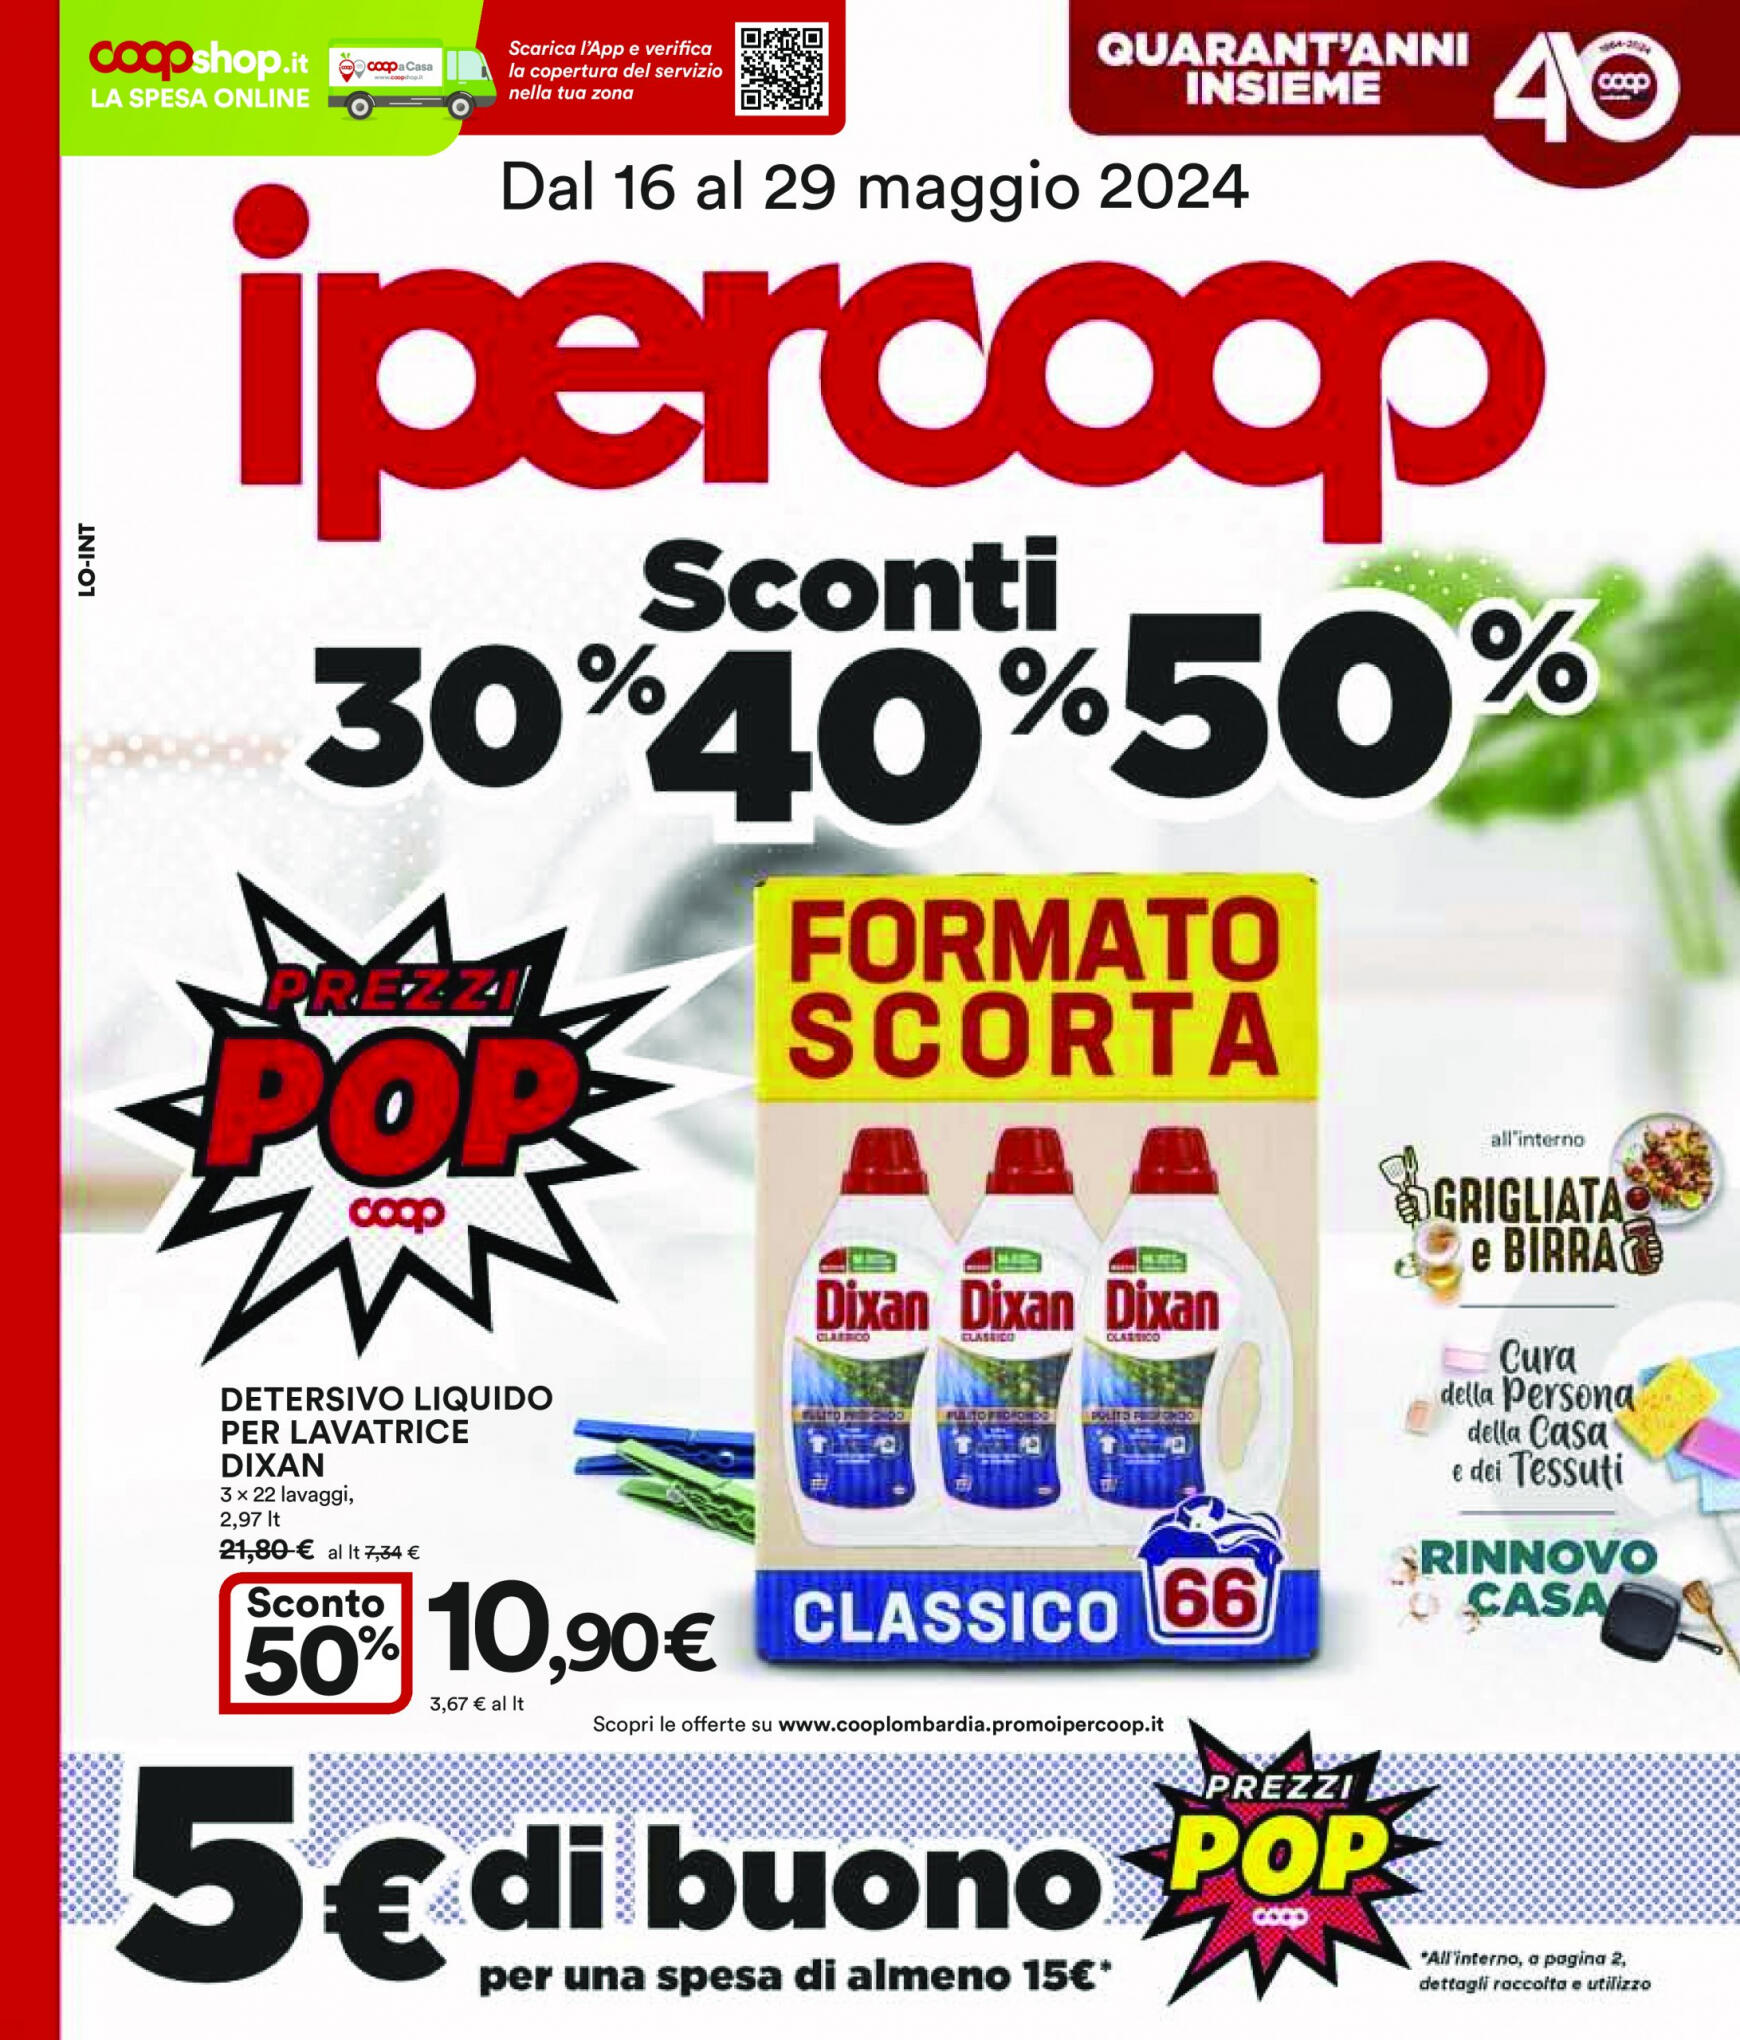 coop - Nuovo volantino Ipercoop 16.05. - 29.05.